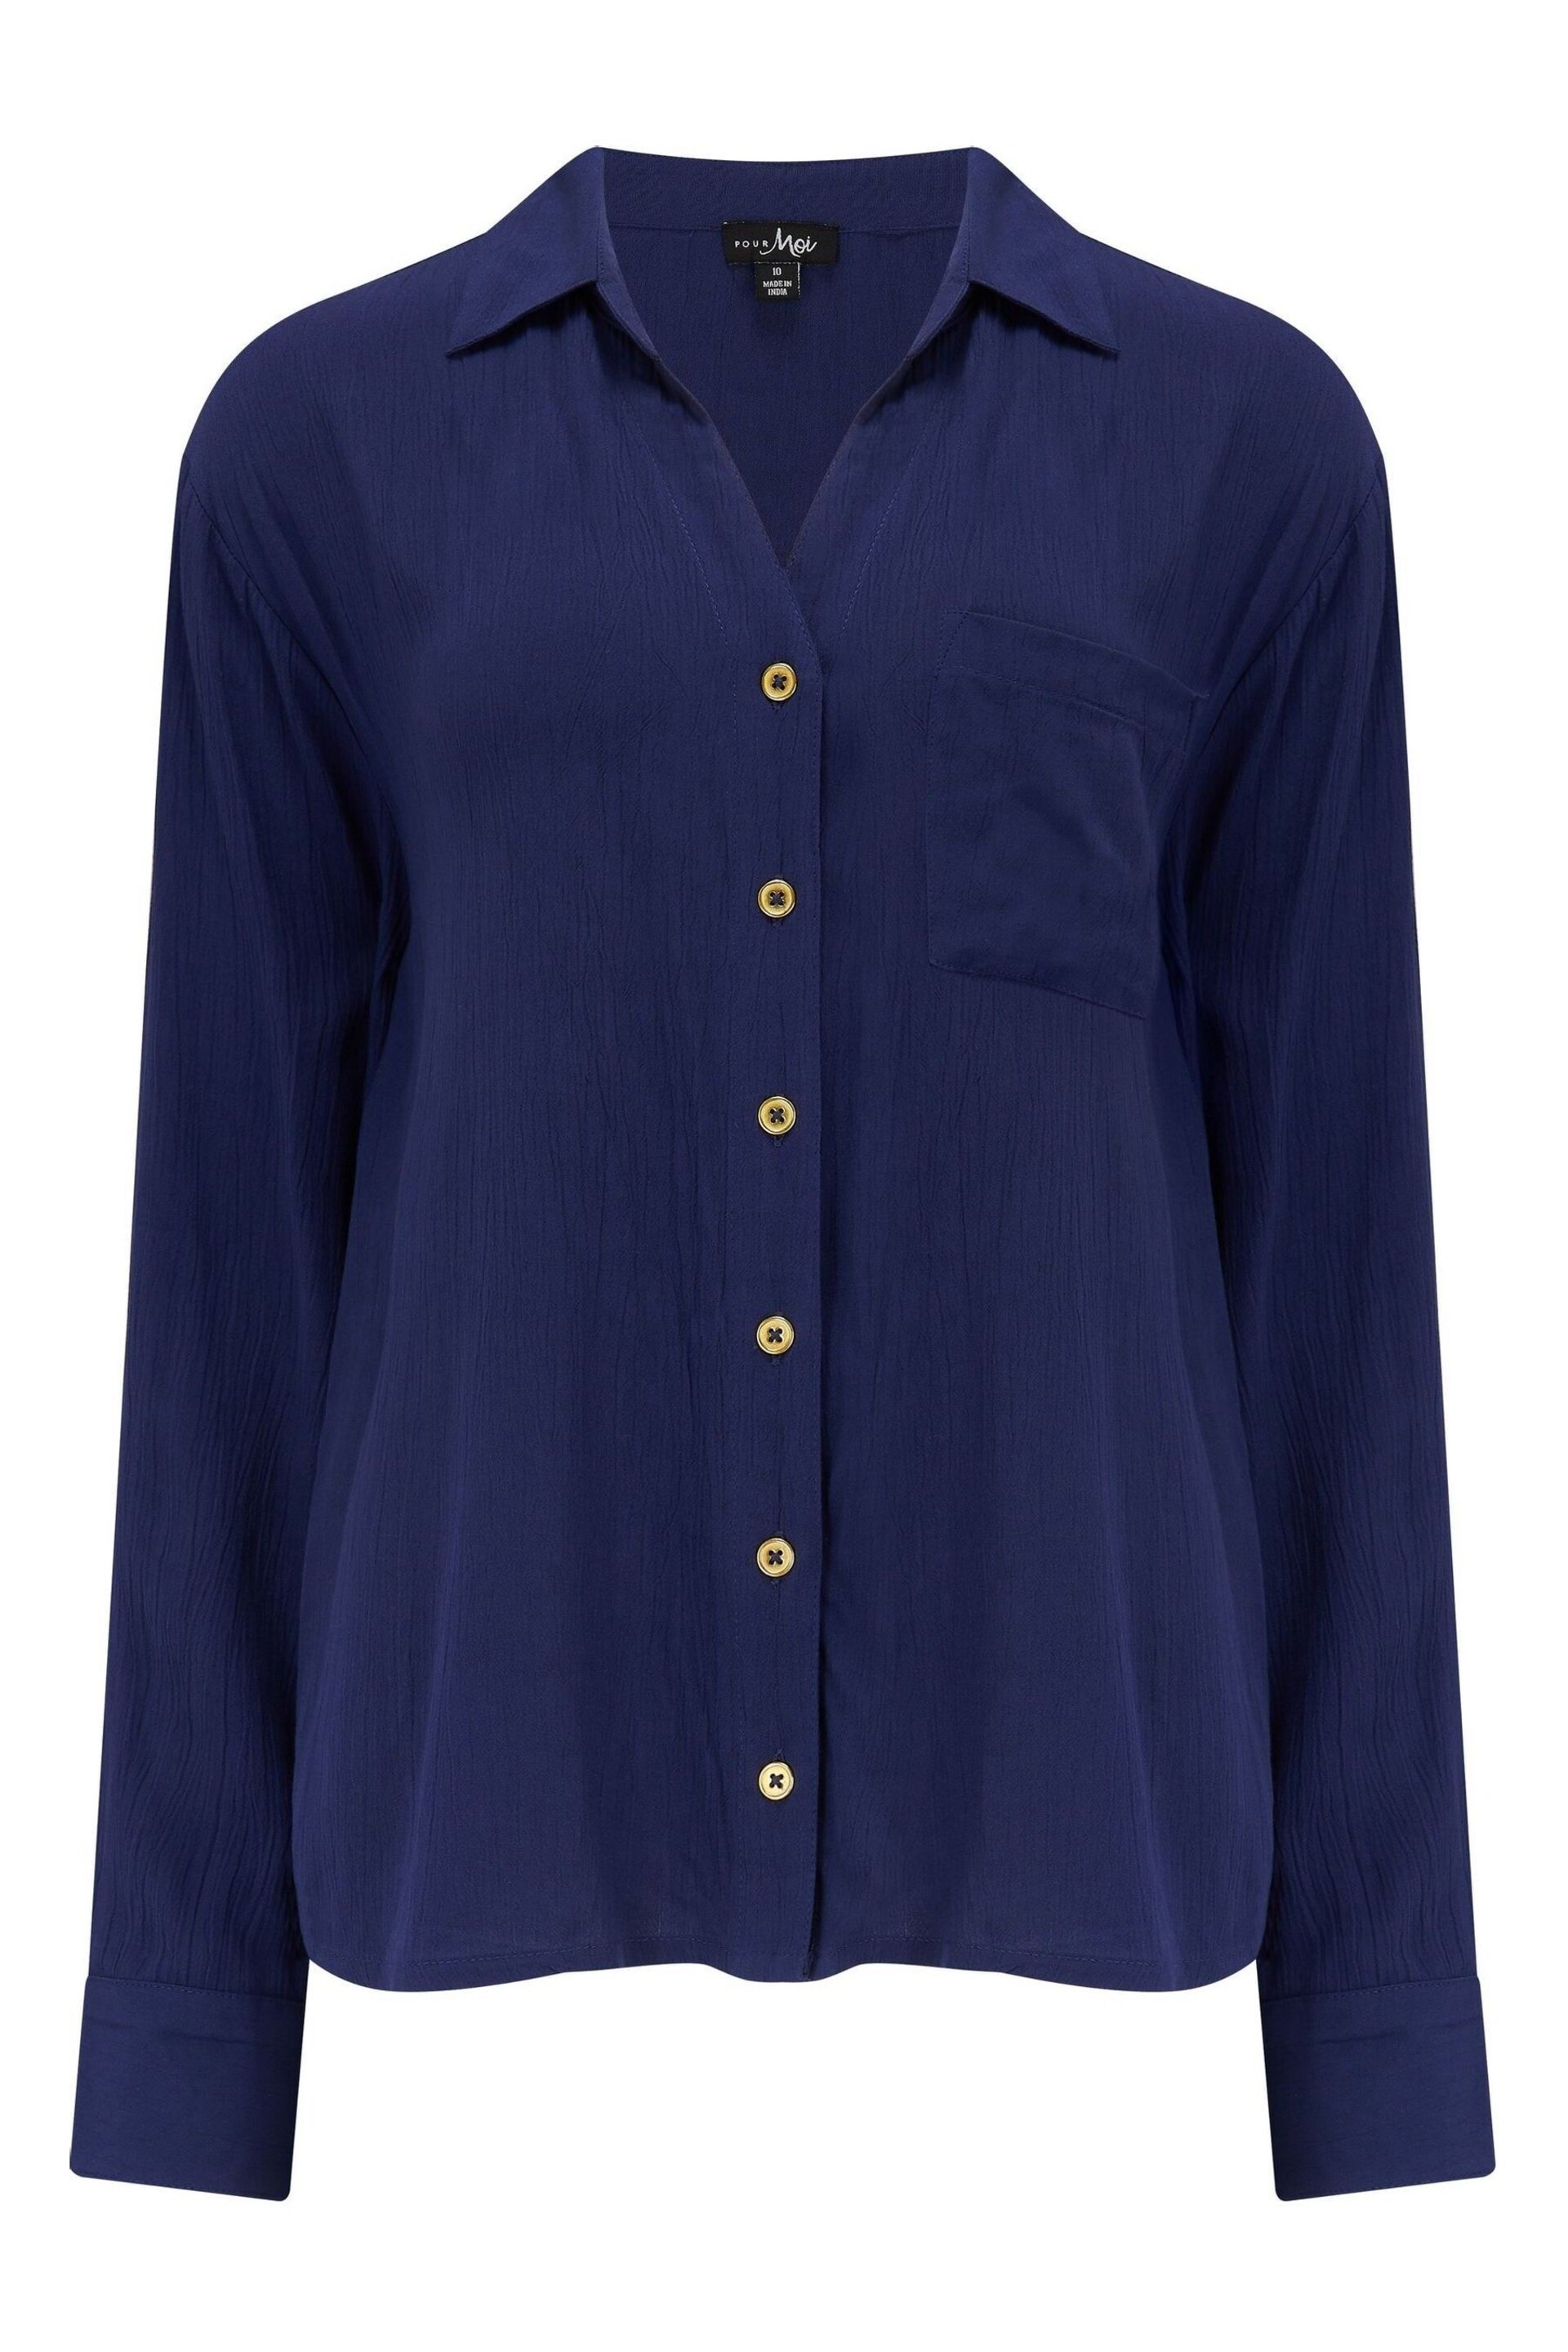 Pour Moi Blue Blu Crinkle Viscose Shirt - Image 5 of 6